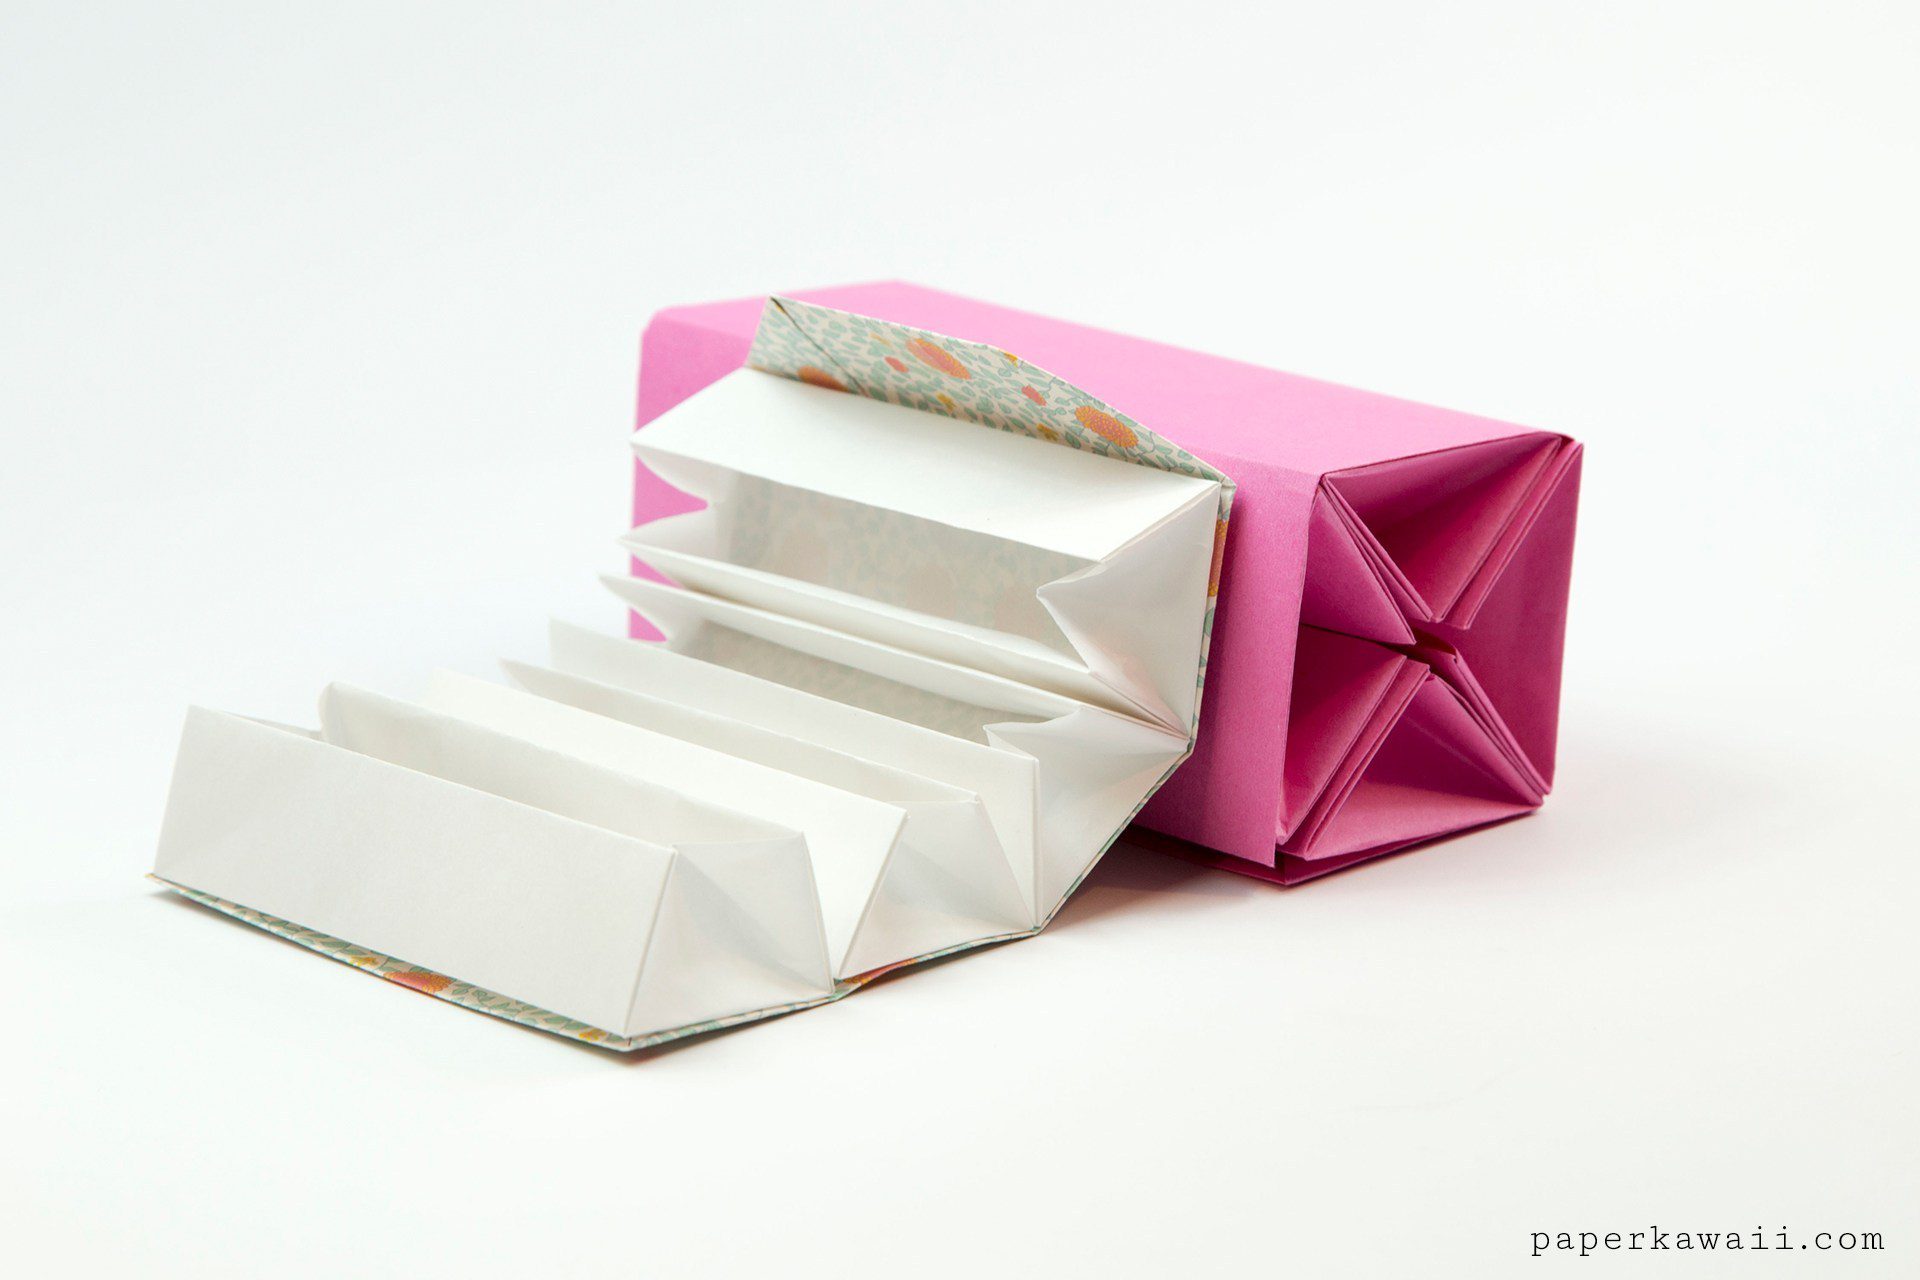 https://shop.paperkawaii.com/wp-content/uploads/2020/06/origami-rollup-box-tutorial-1.jpg